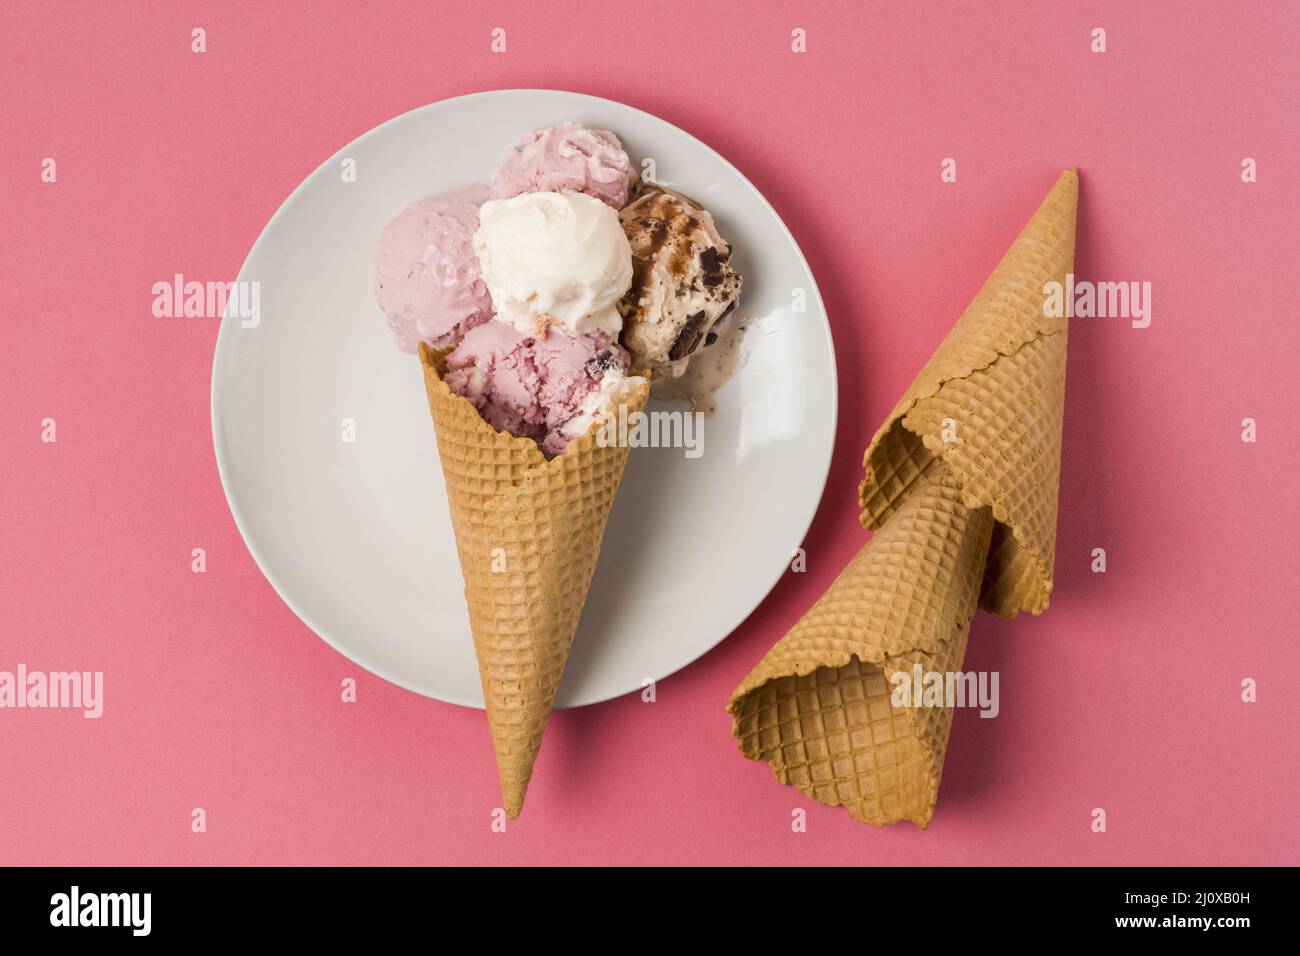 https://c8.alamy.com/comp/2J0XB0H/waffle-cones-with-ice-cream-plate-empty-cones-high-quality-photo-2J0XB0H.jpg